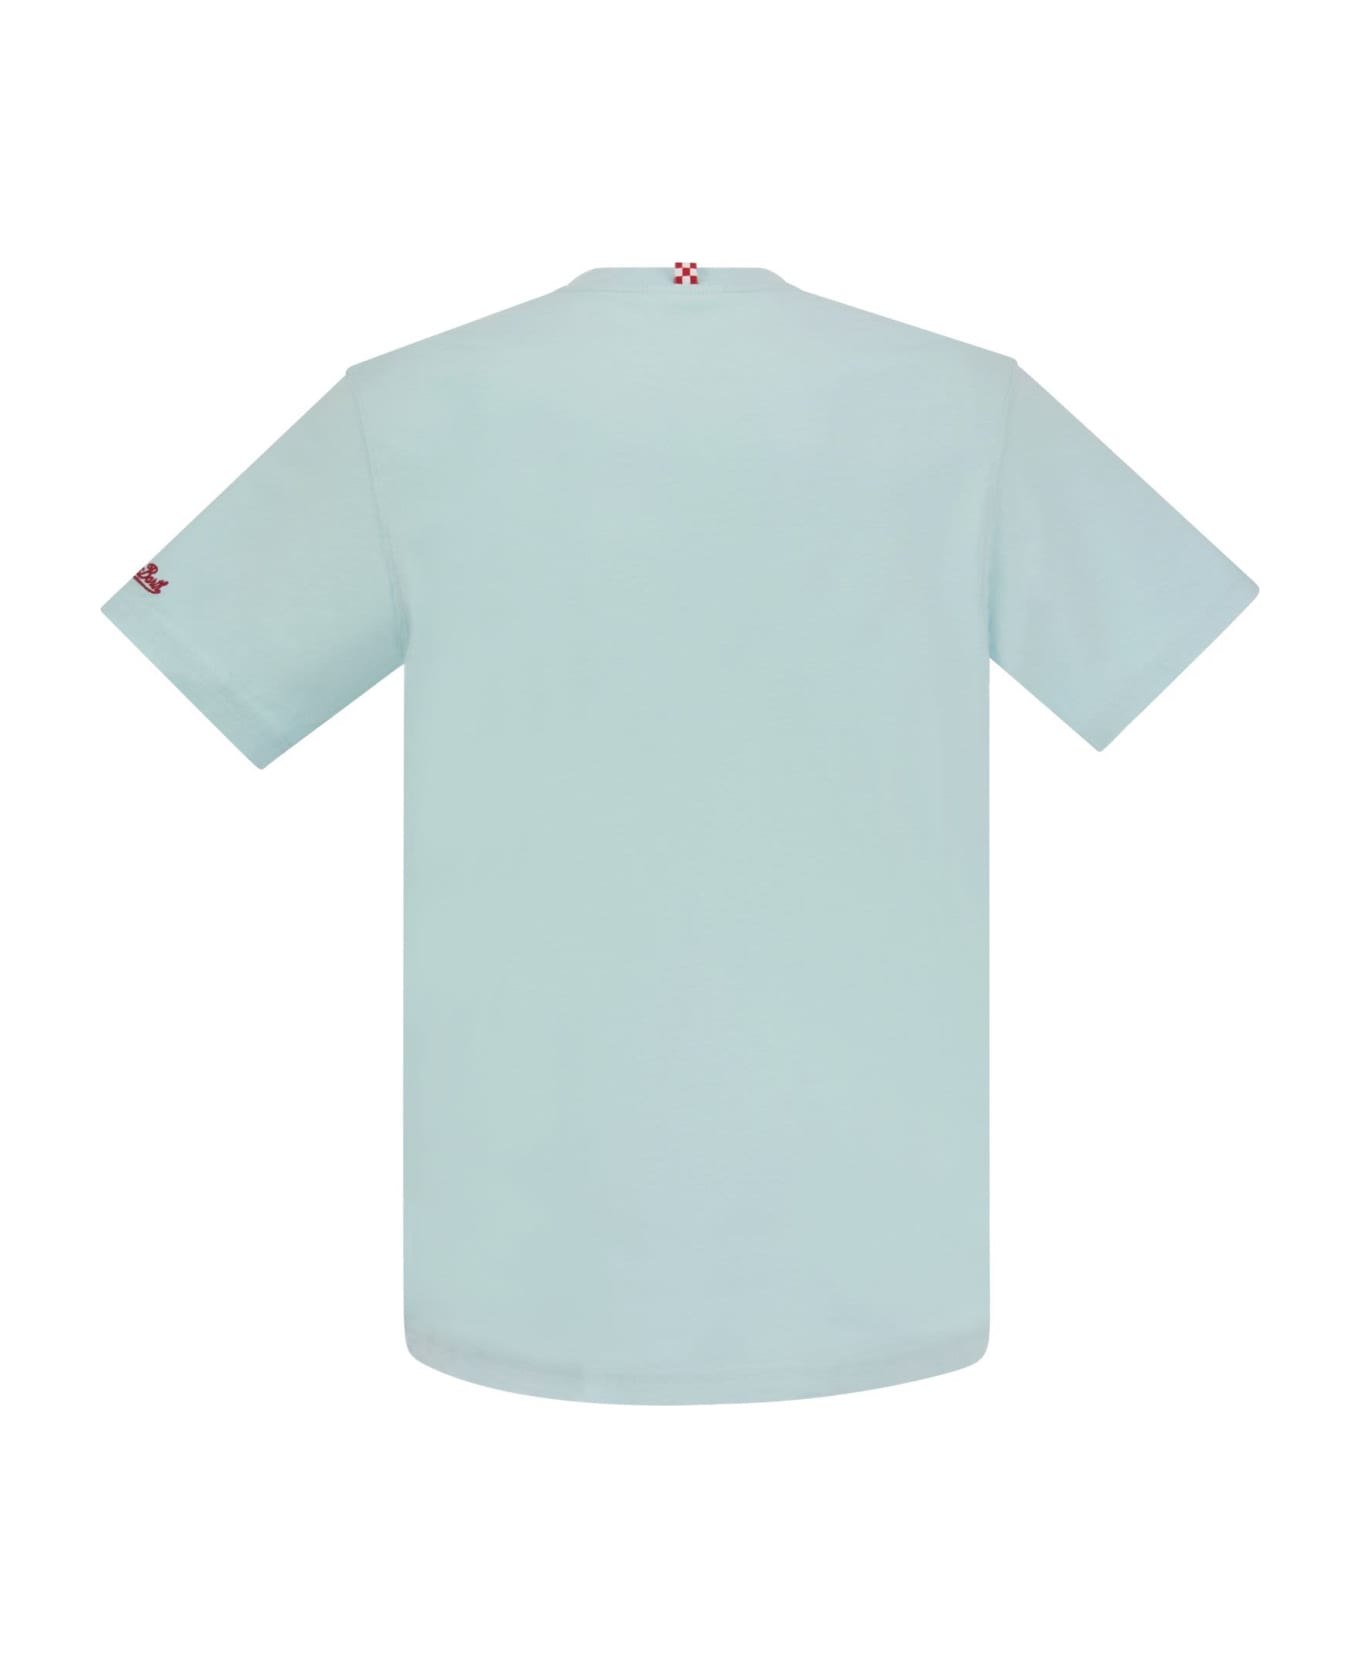 MC2 Saint Barth Sunbarthing T-shirt With Embroidery On Pocket - Light Blue